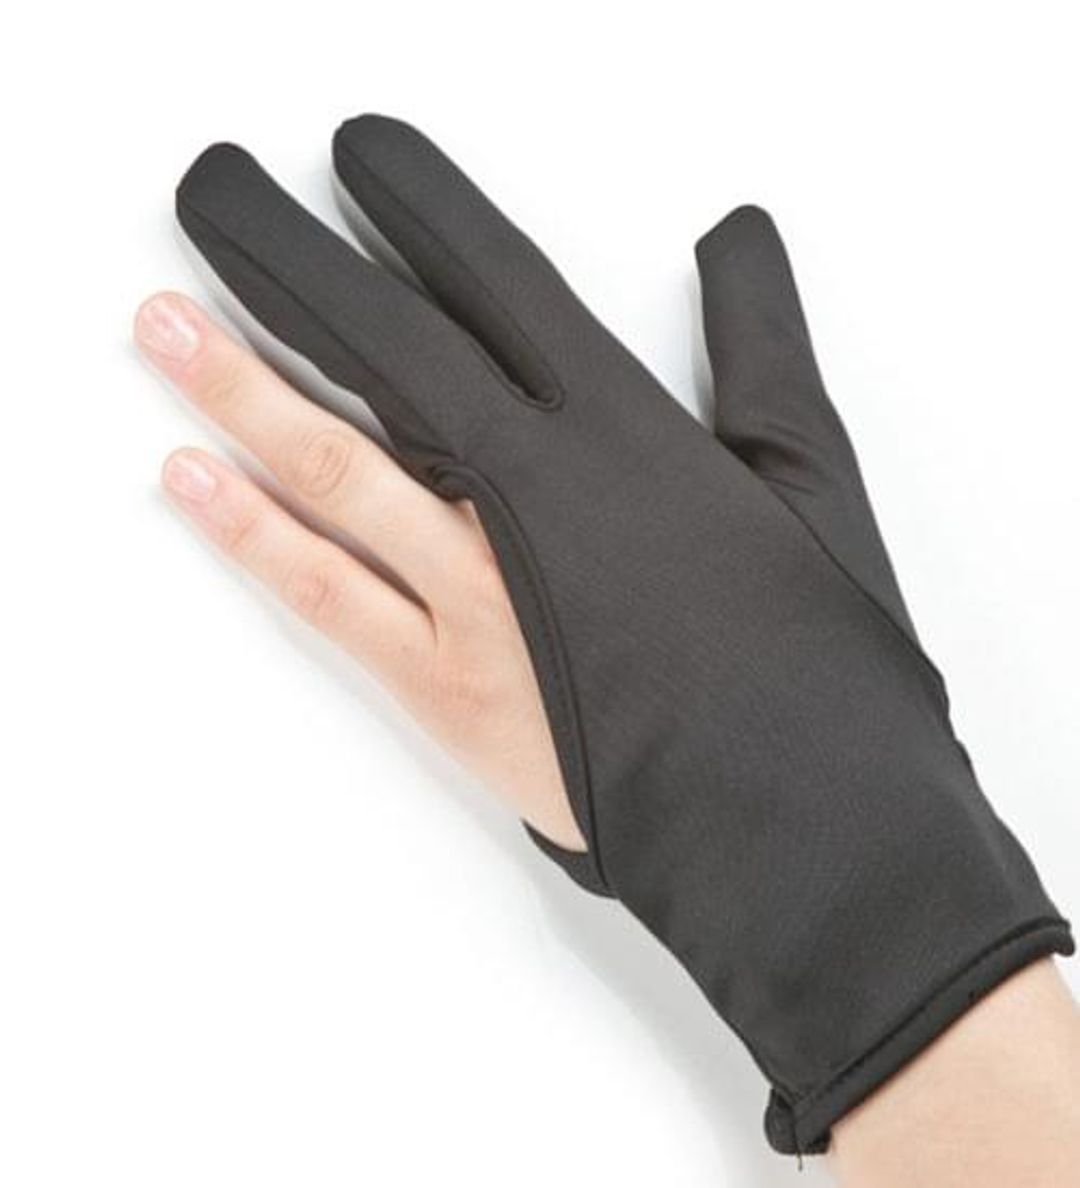 ghd Styling Glove